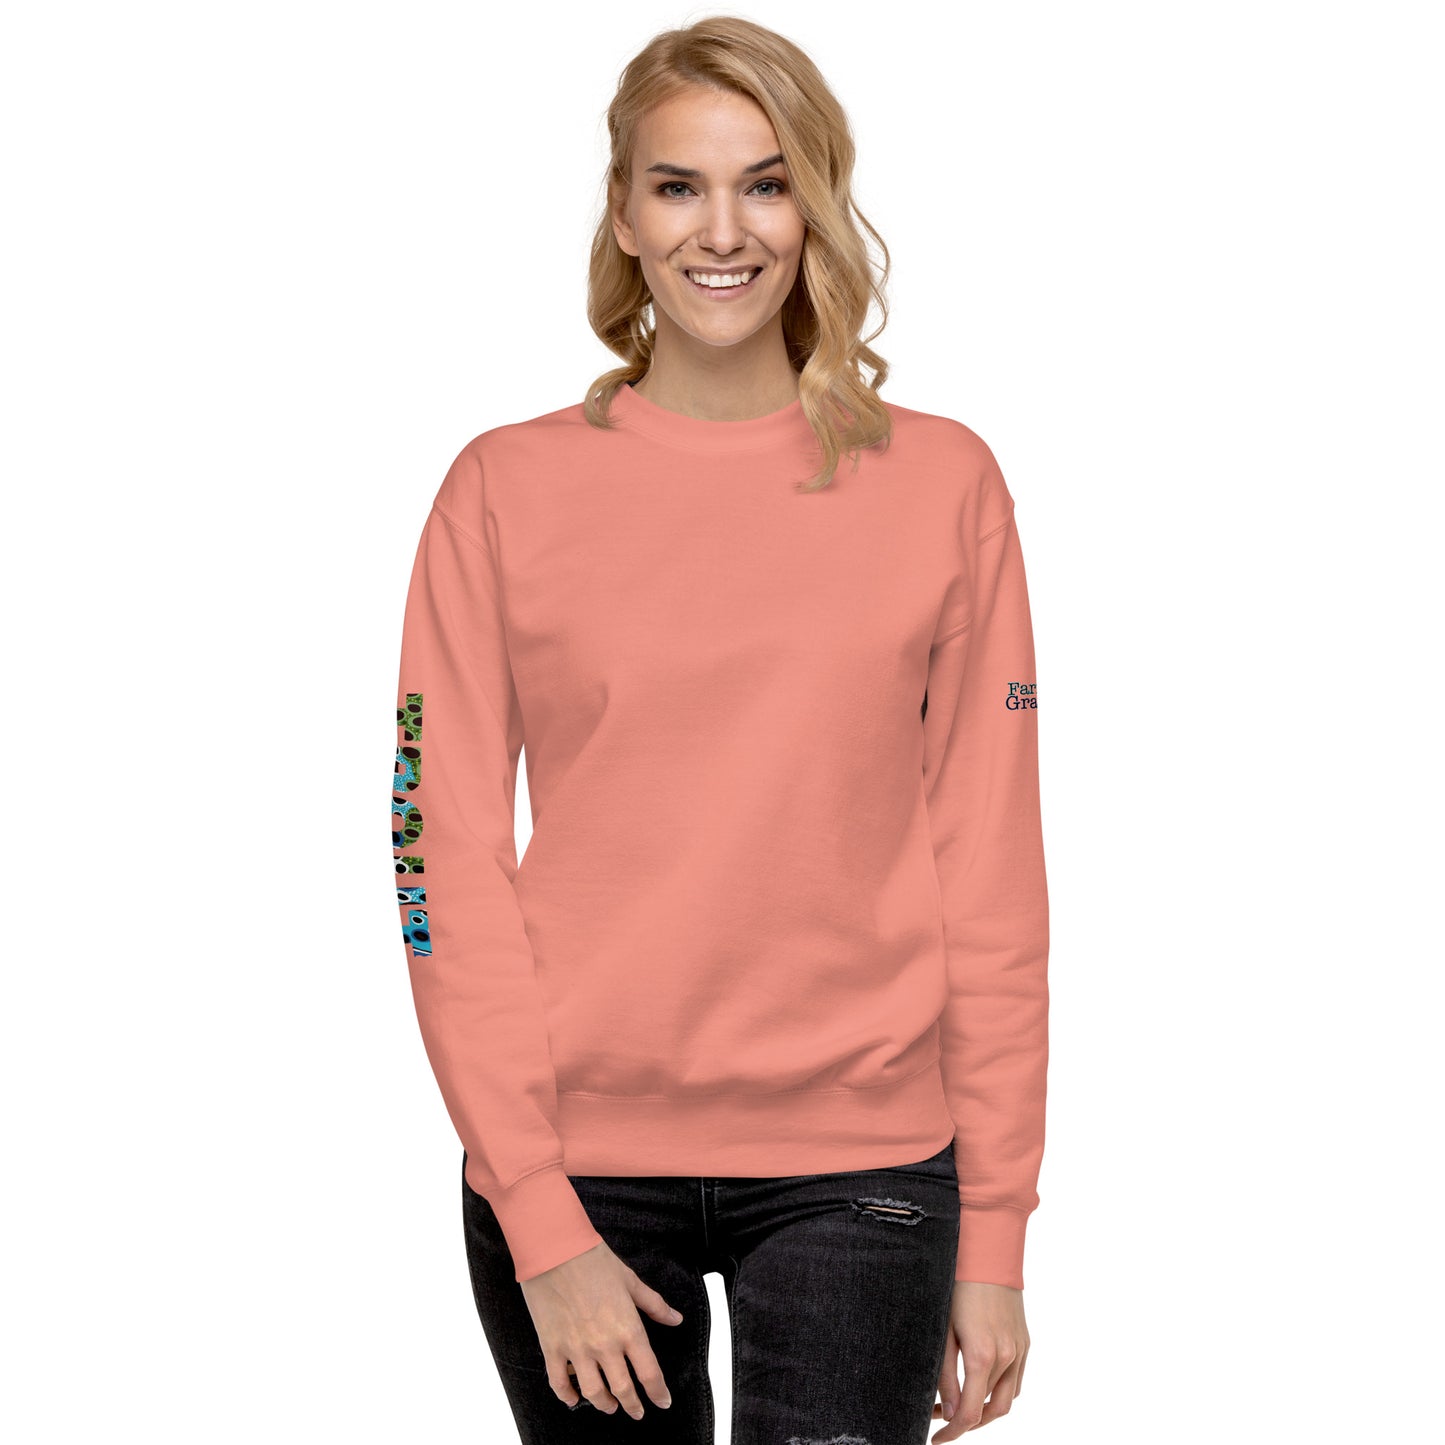 Trout PA Ladies Premium Sweatshirt